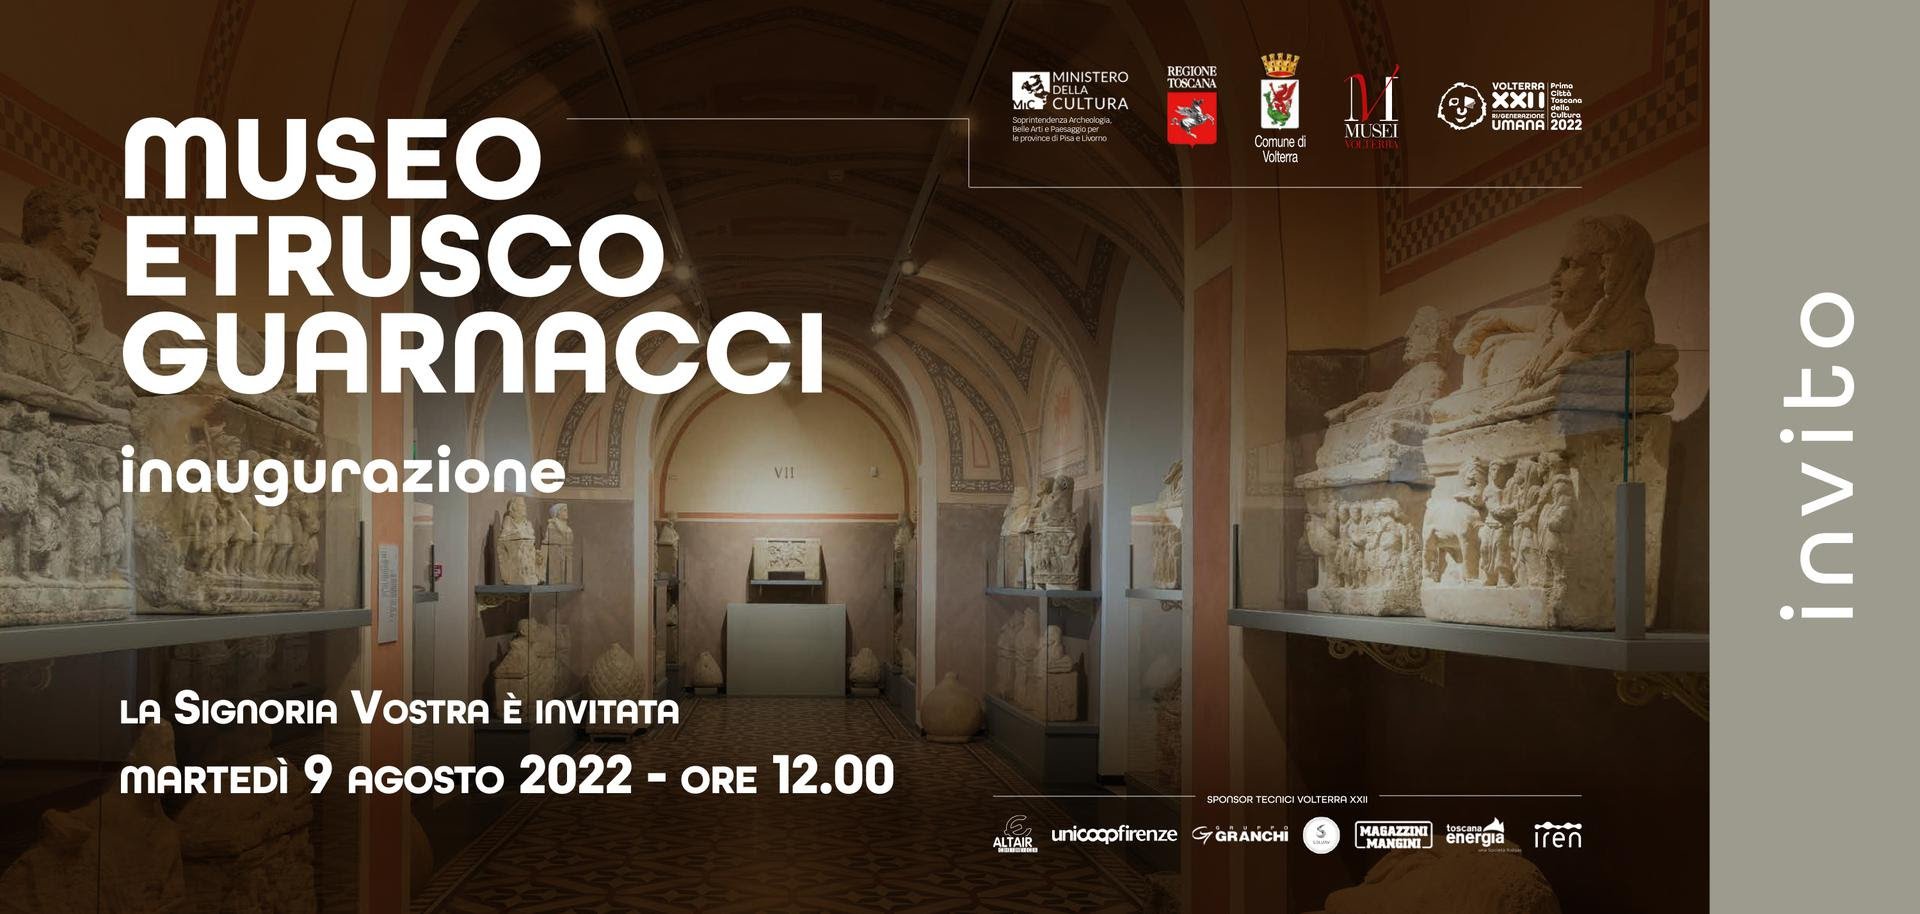 Inaugurazione Museo Etrusco Guarnacci di Volterra